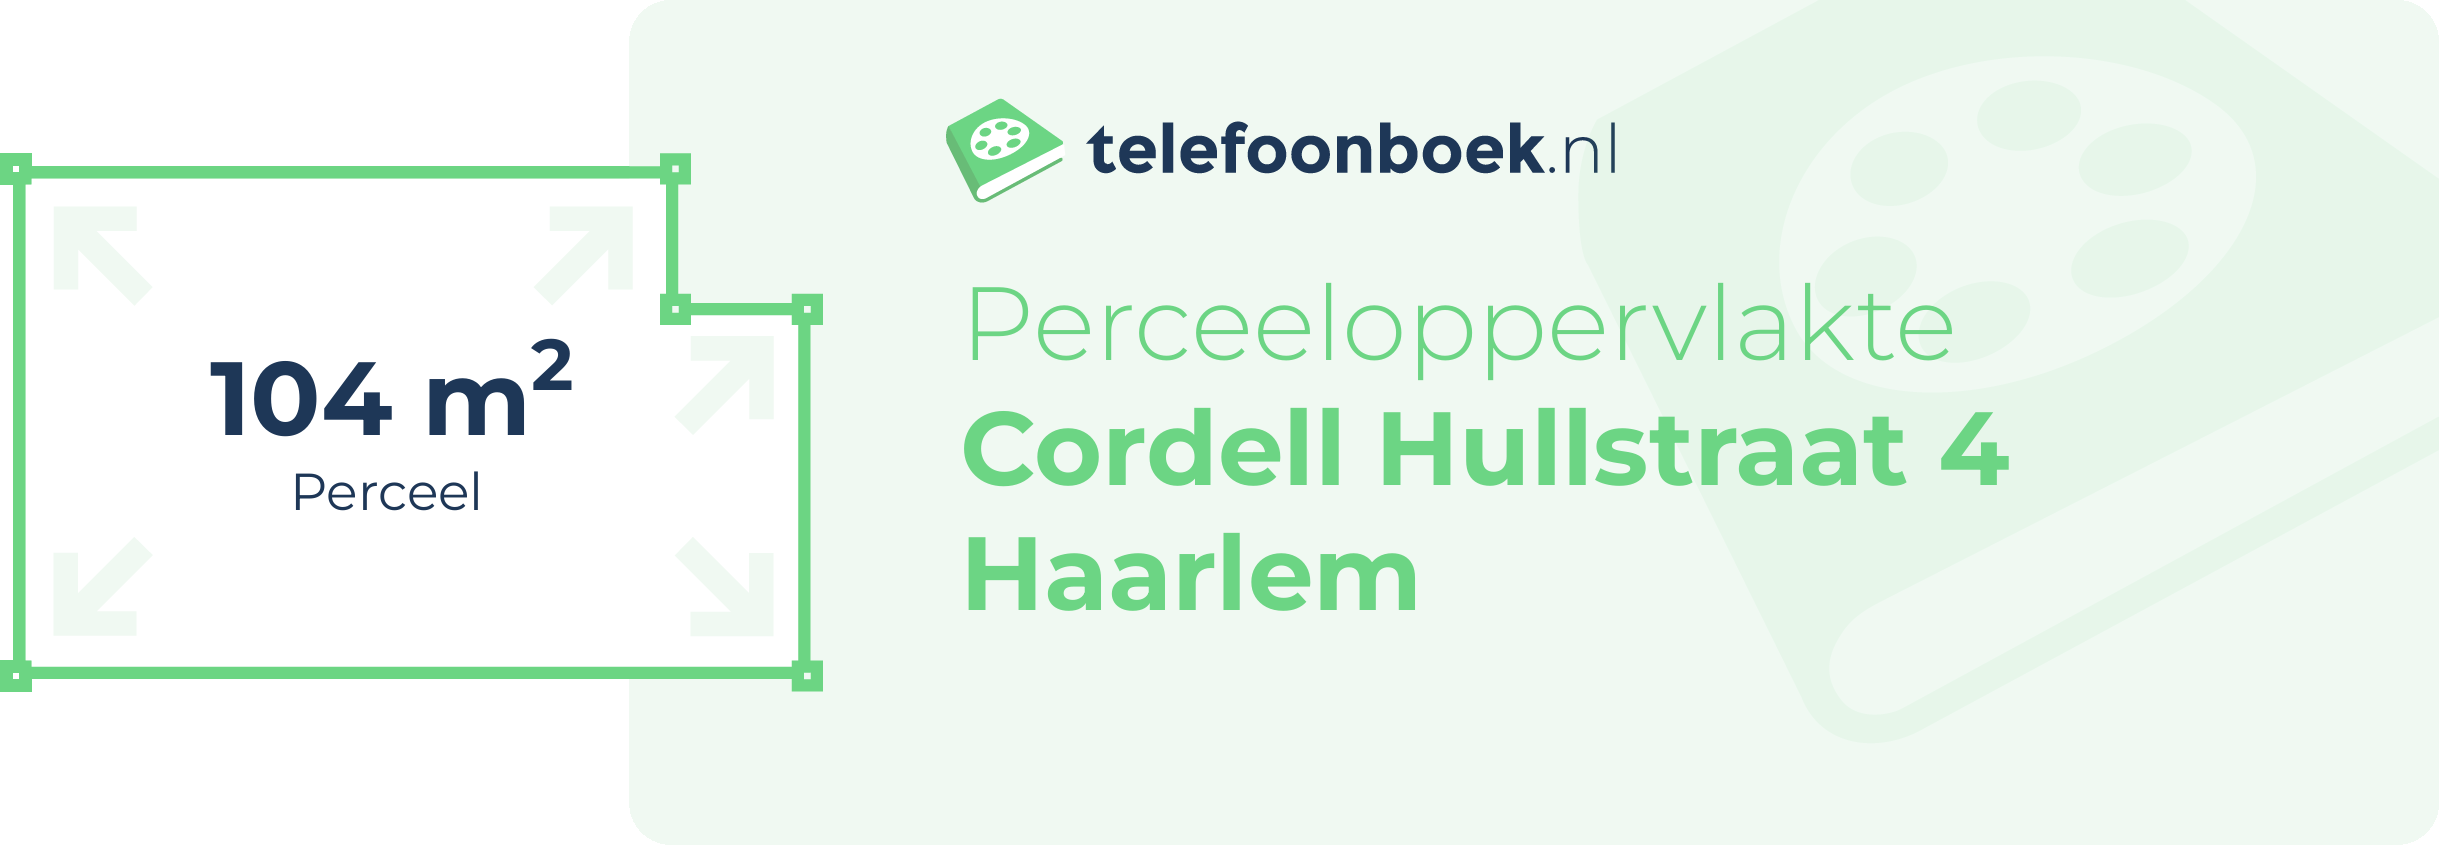 Perceeloppervlakte Cordell Hullstraat 4 Haarlem